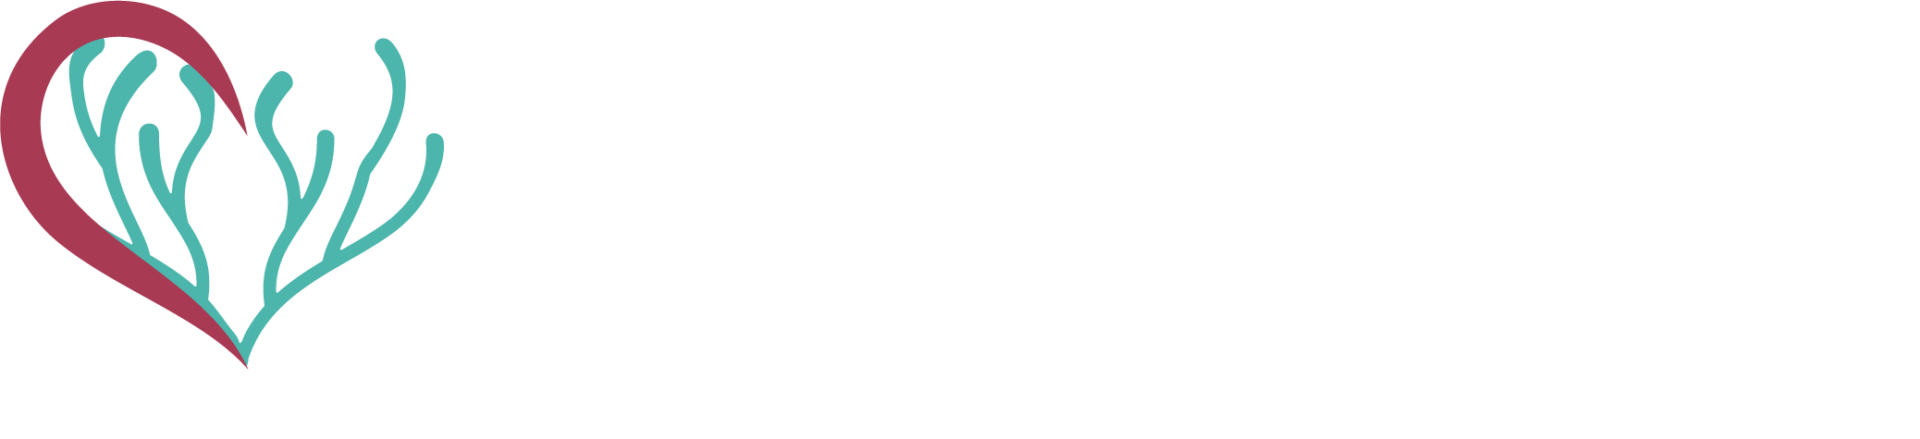 CoralReef-Lipids Logo-WHITE-Final